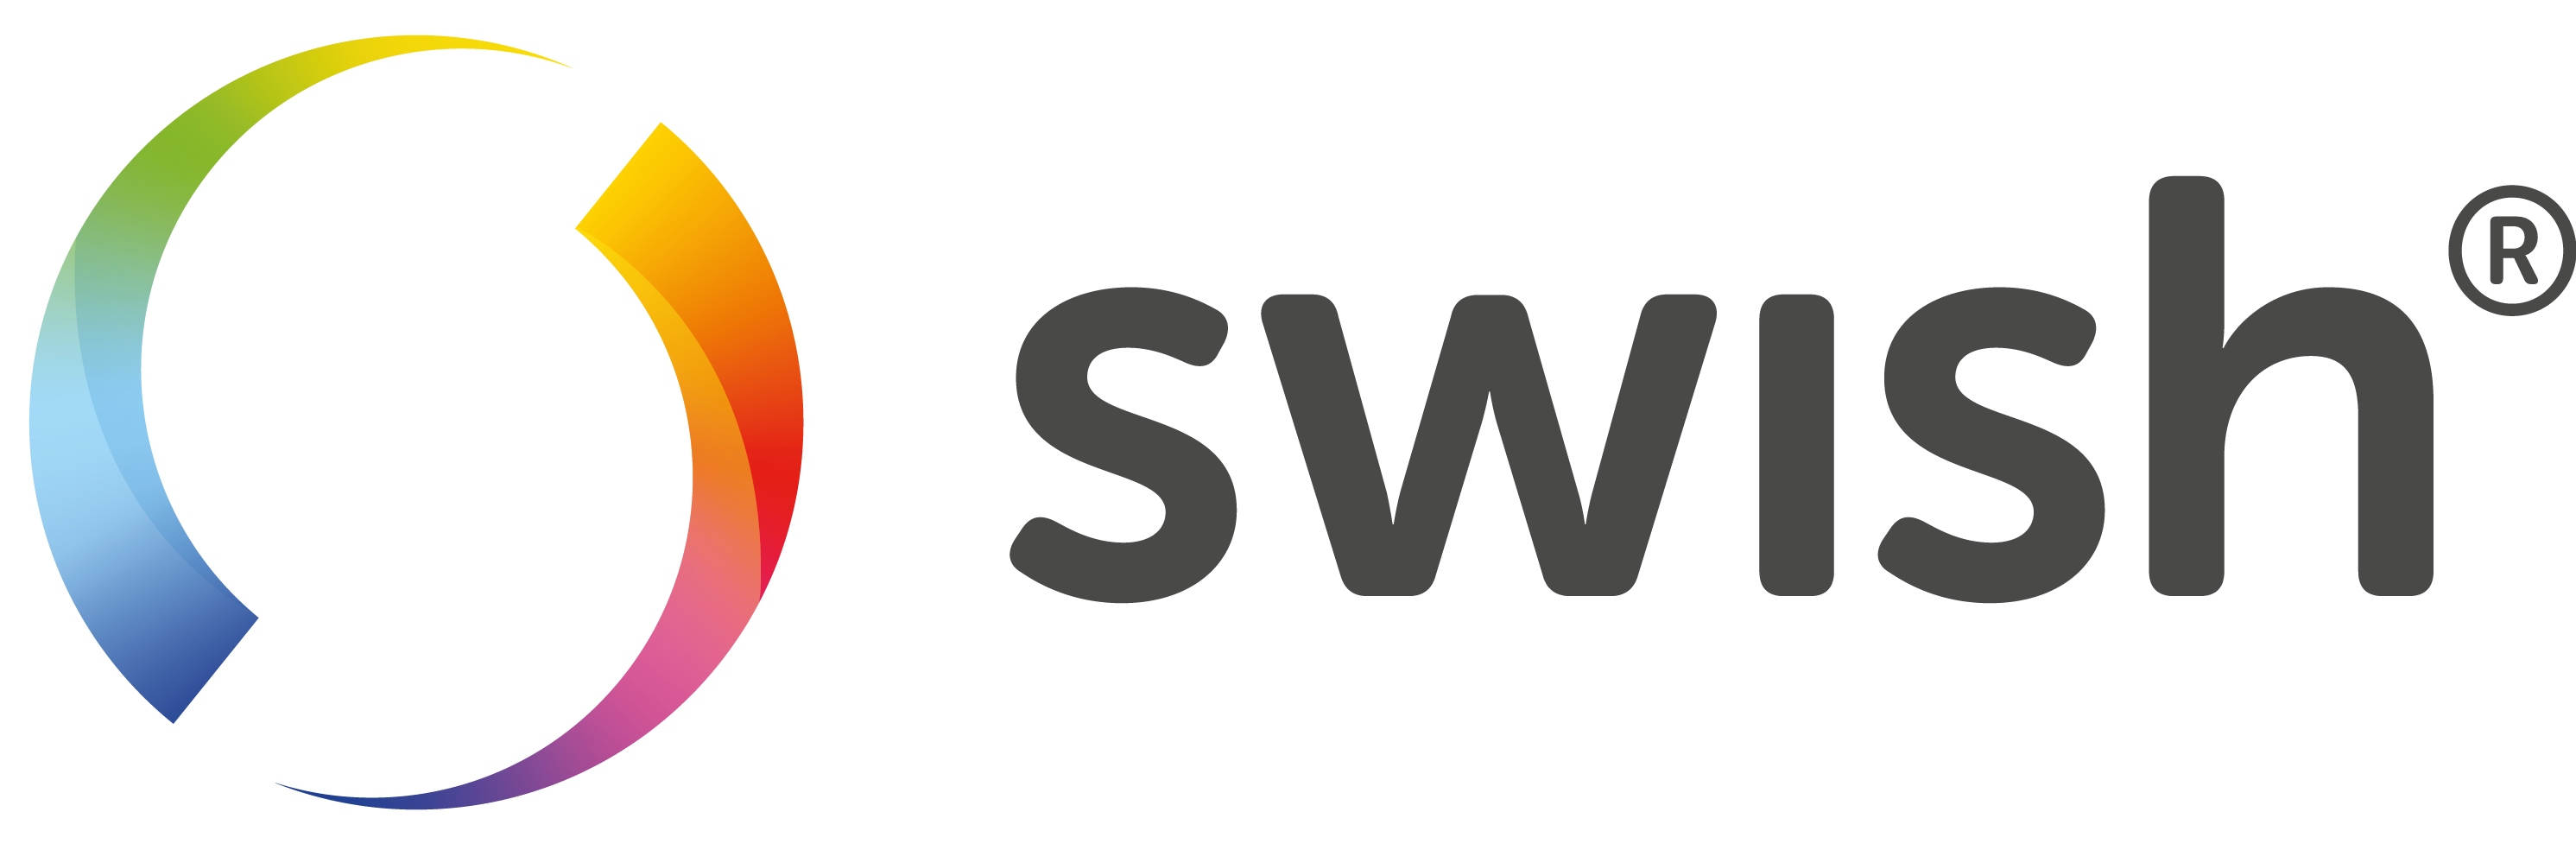 swish_logo_secondary_cmyk